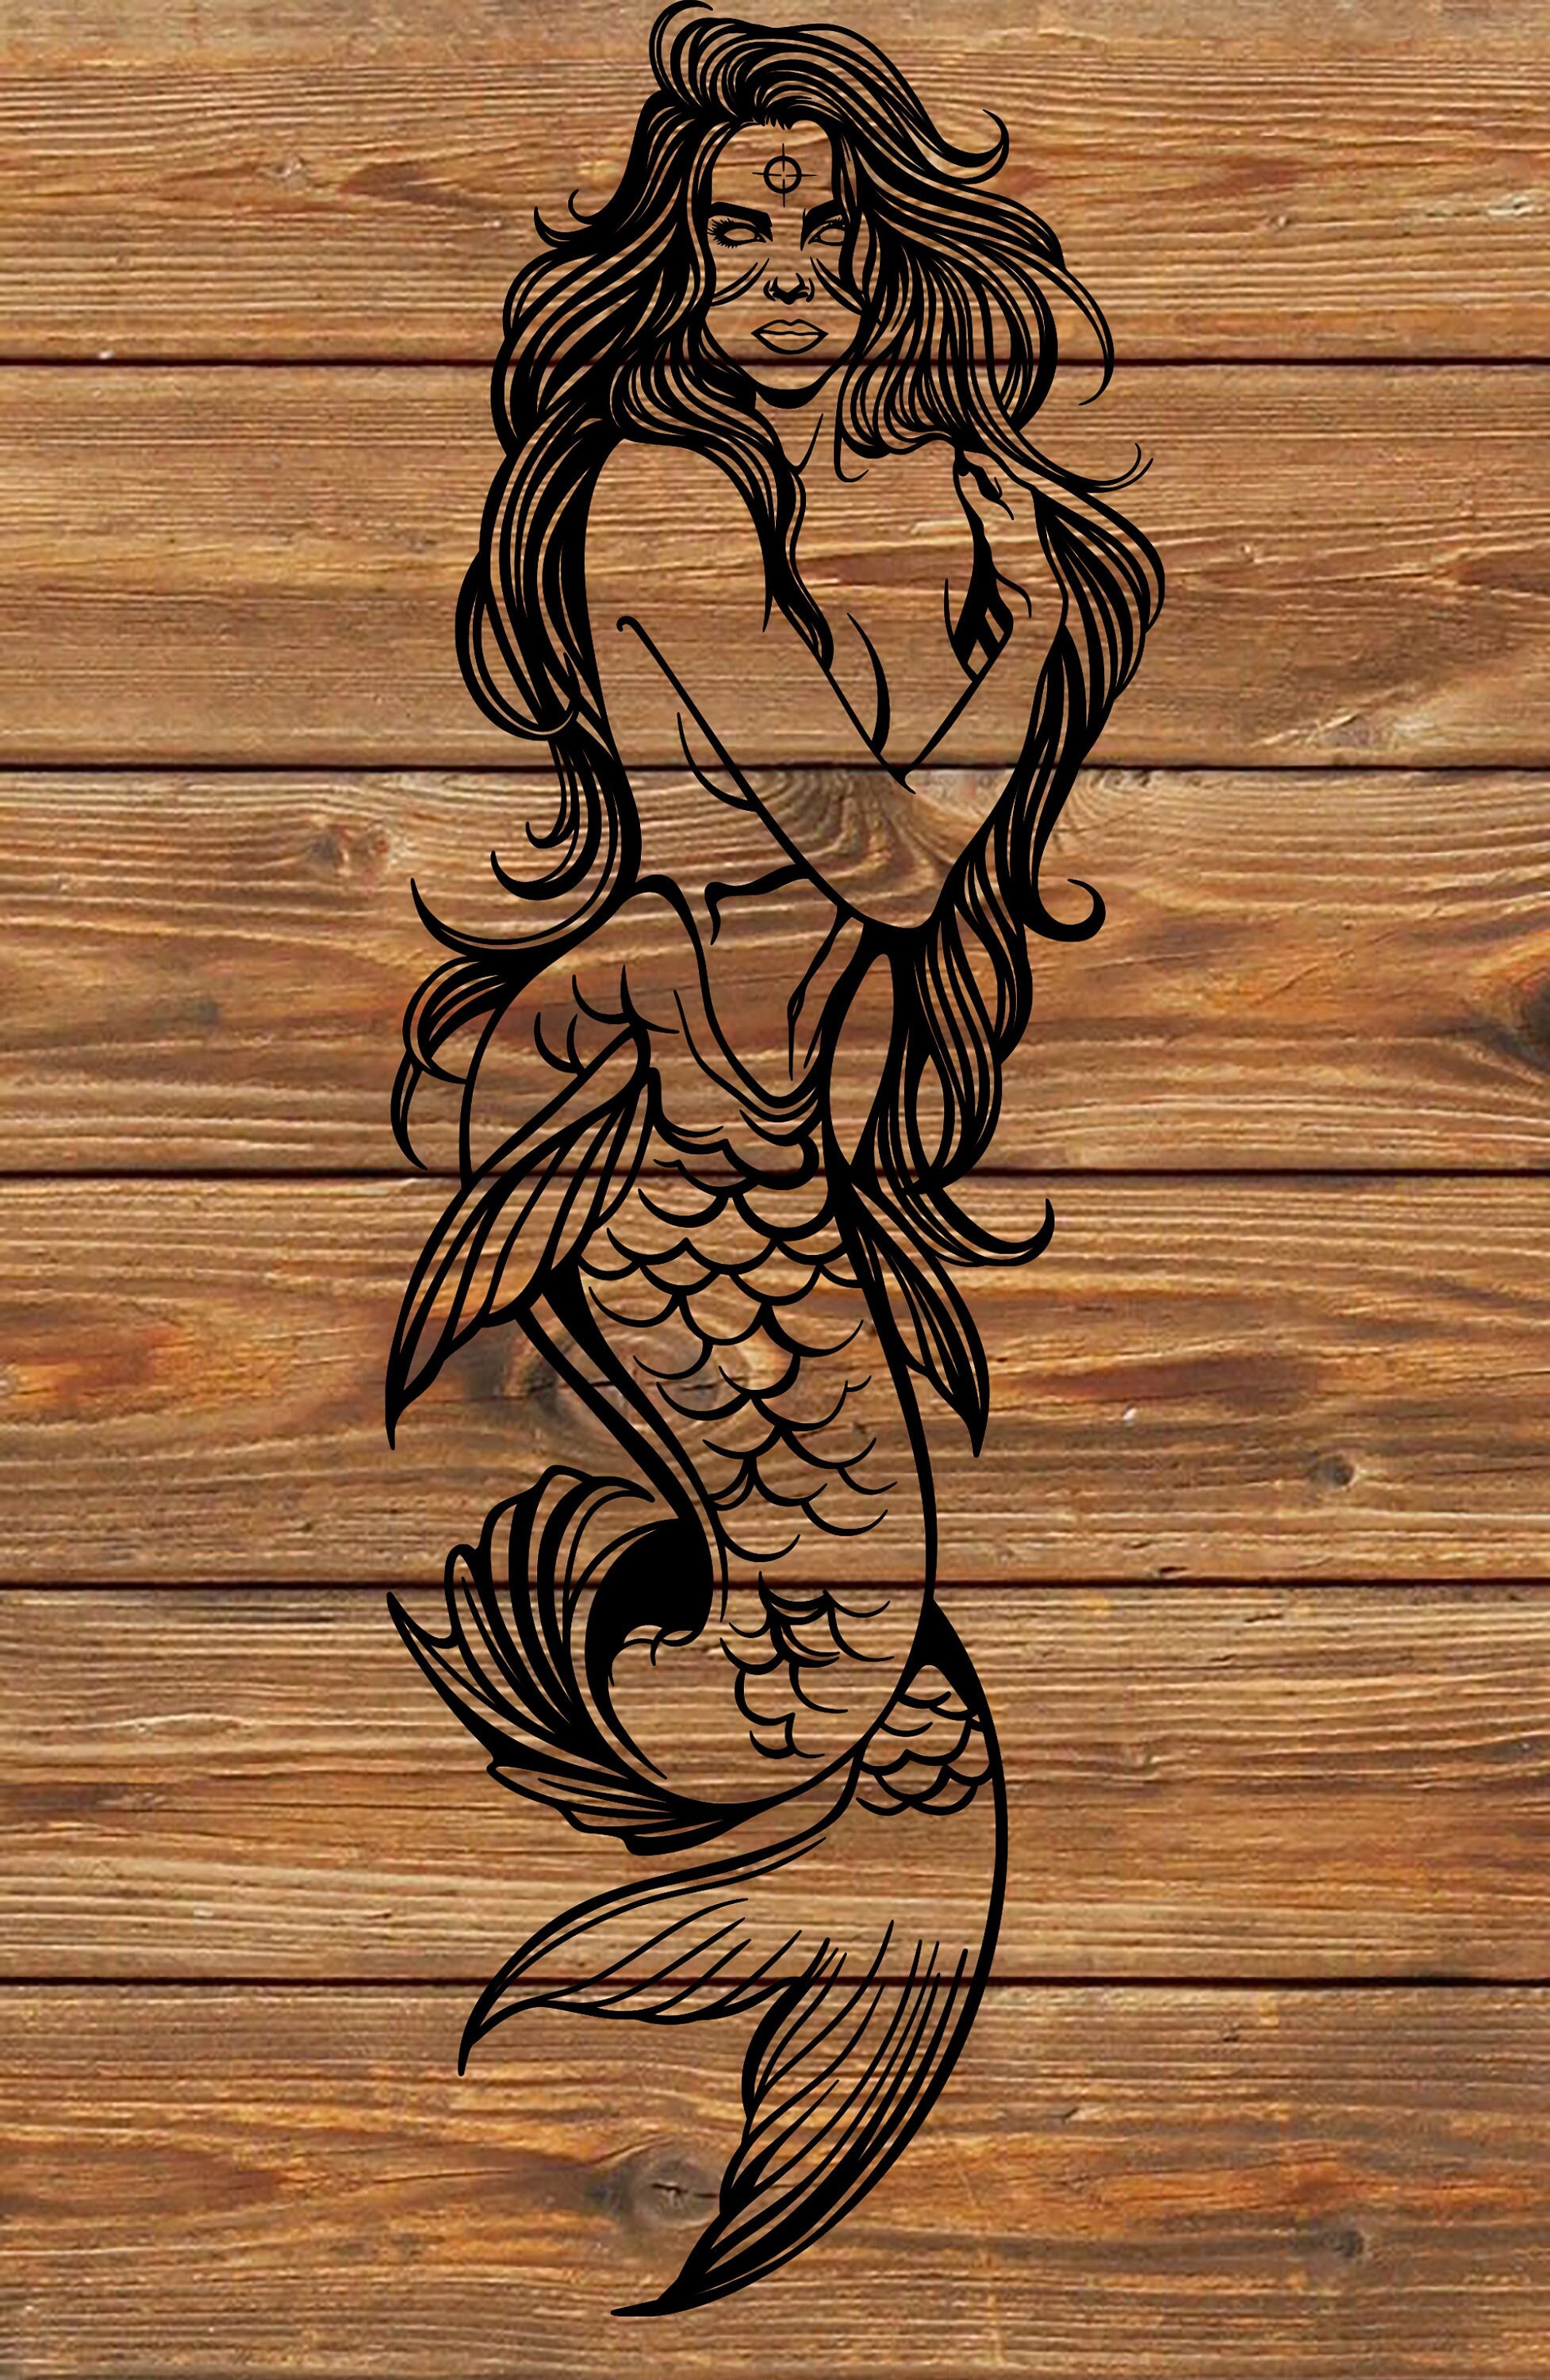 Details more than 213 mermaid silhouette tattoo